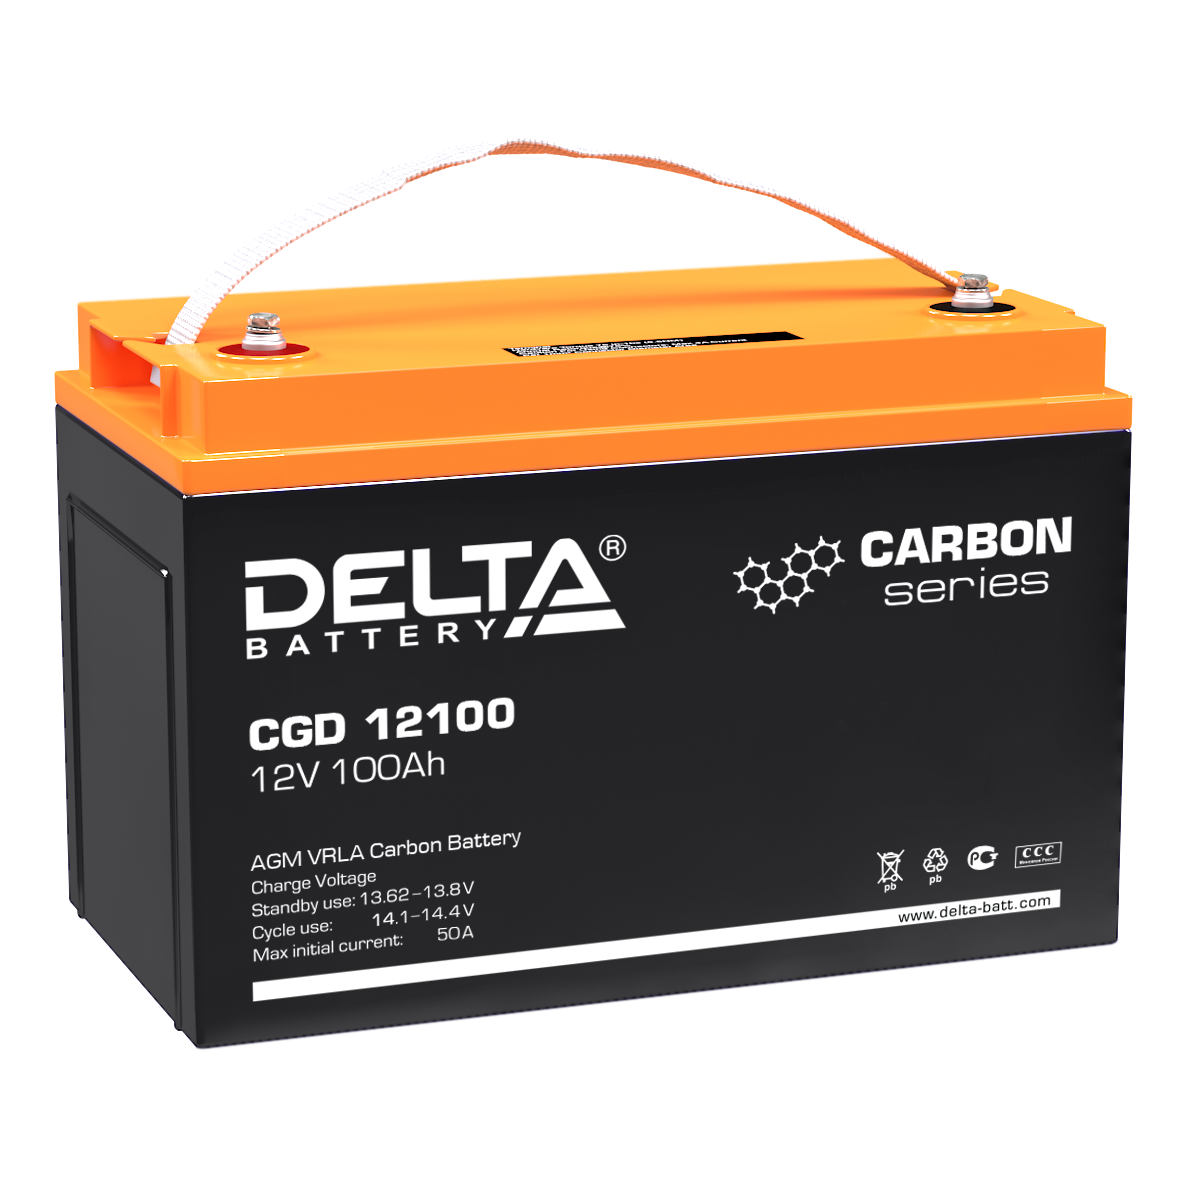 Аккумуляторная батарея Delta CGD 12100